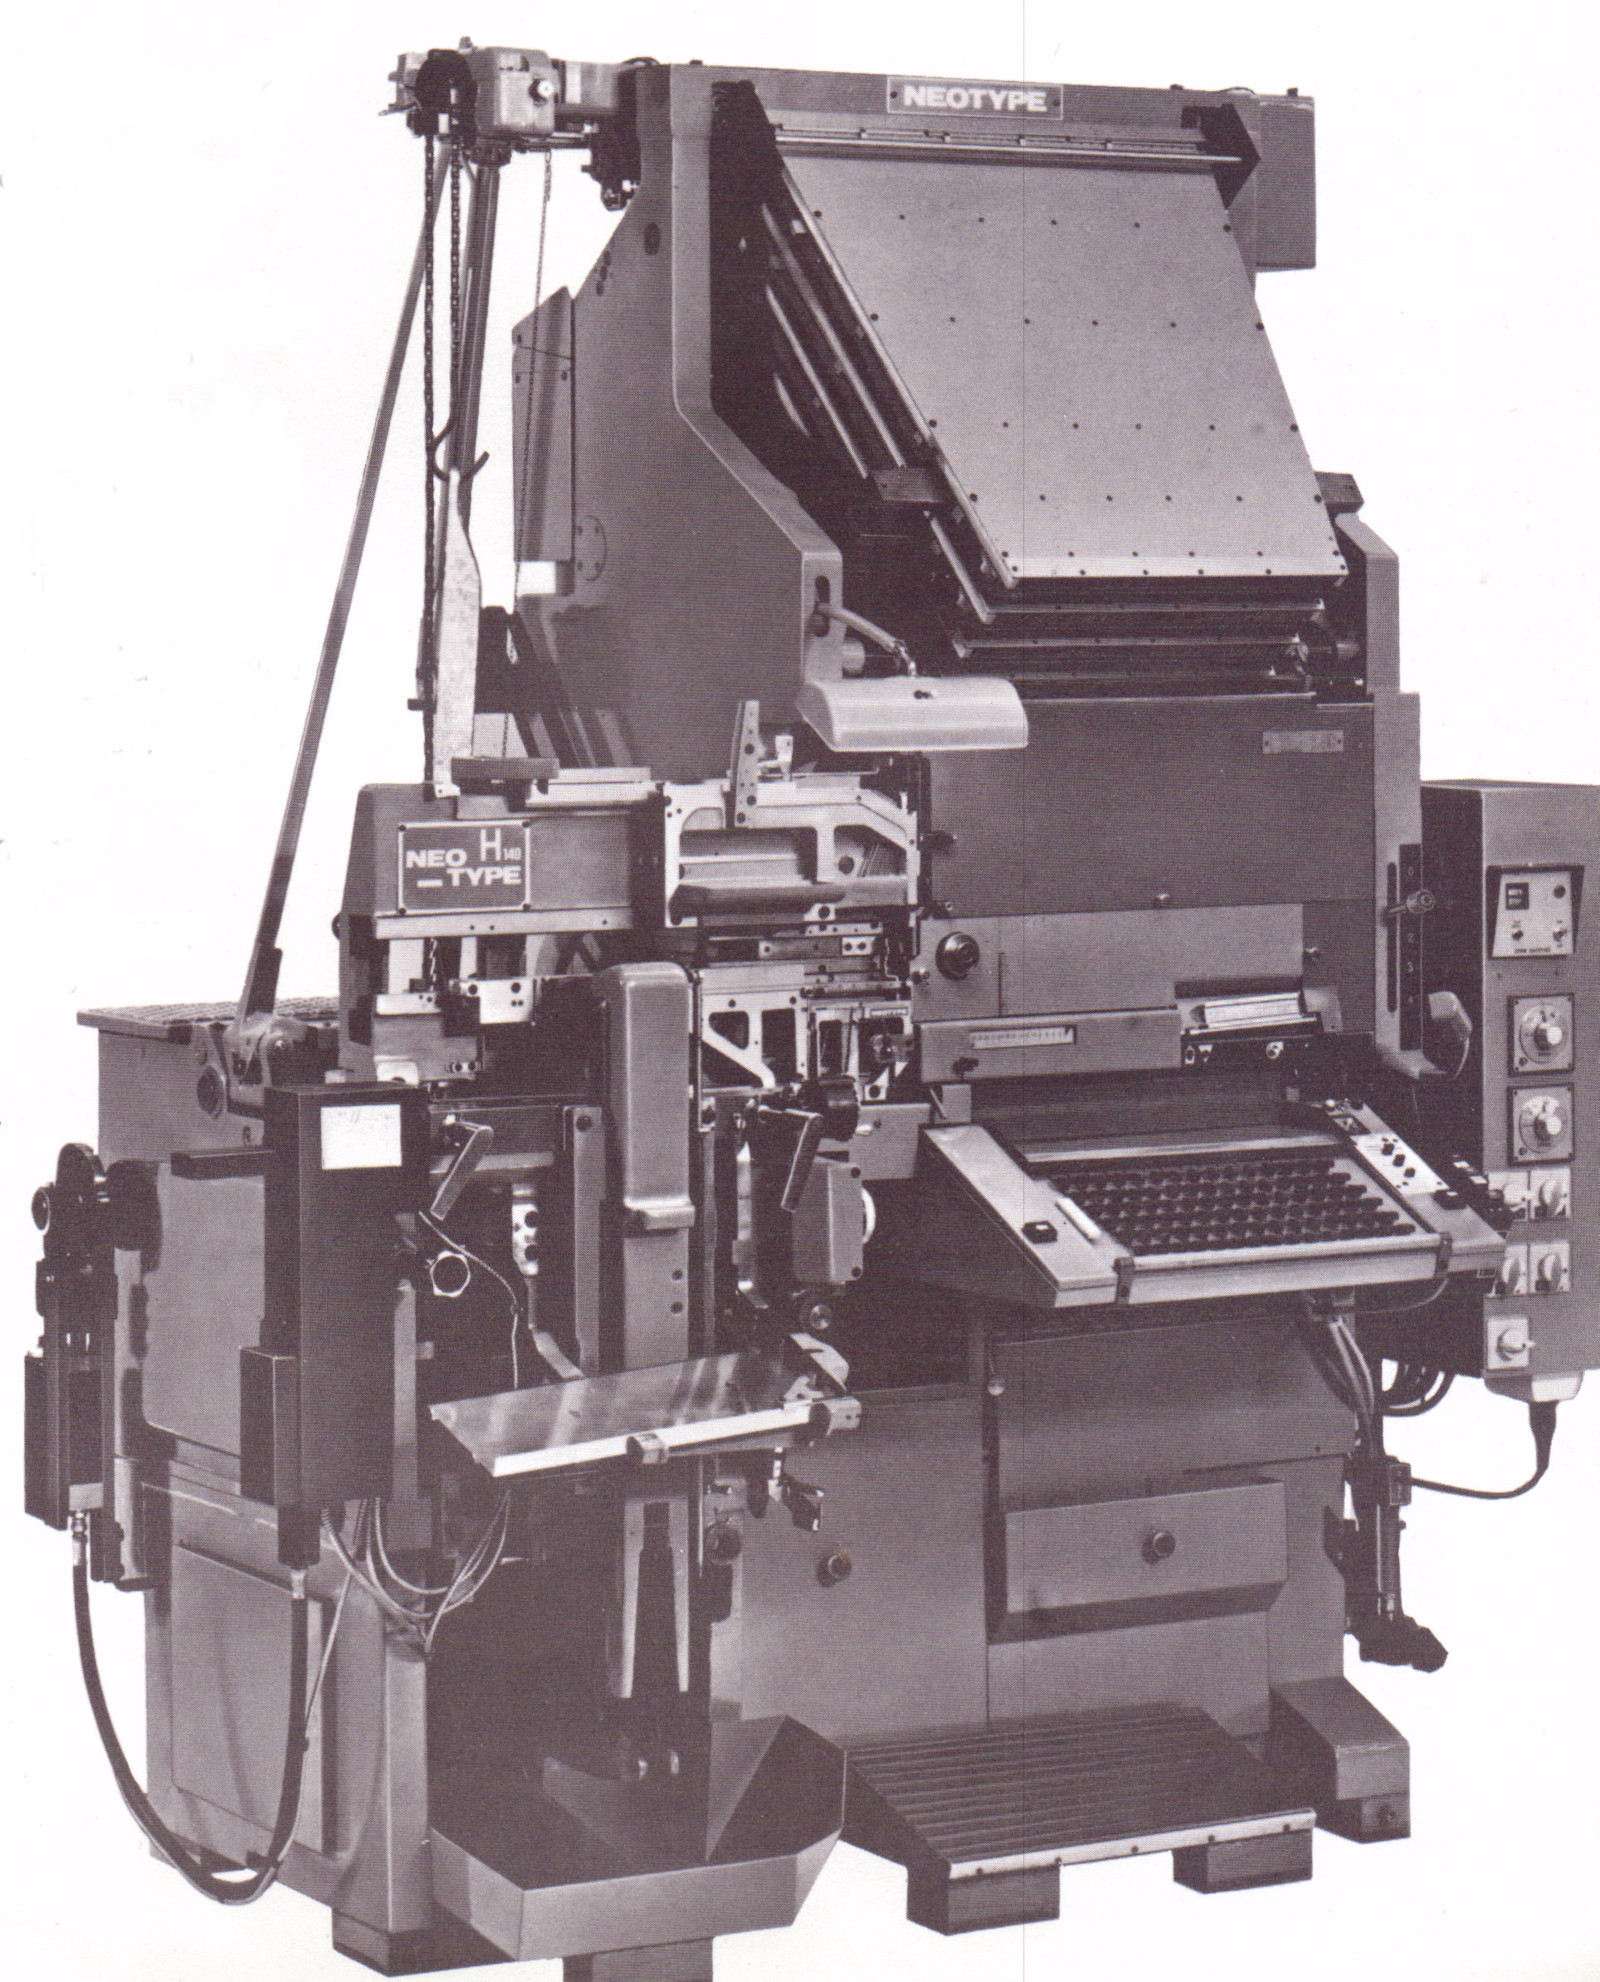 Neotype H140 Russian linecasting typesetting machine